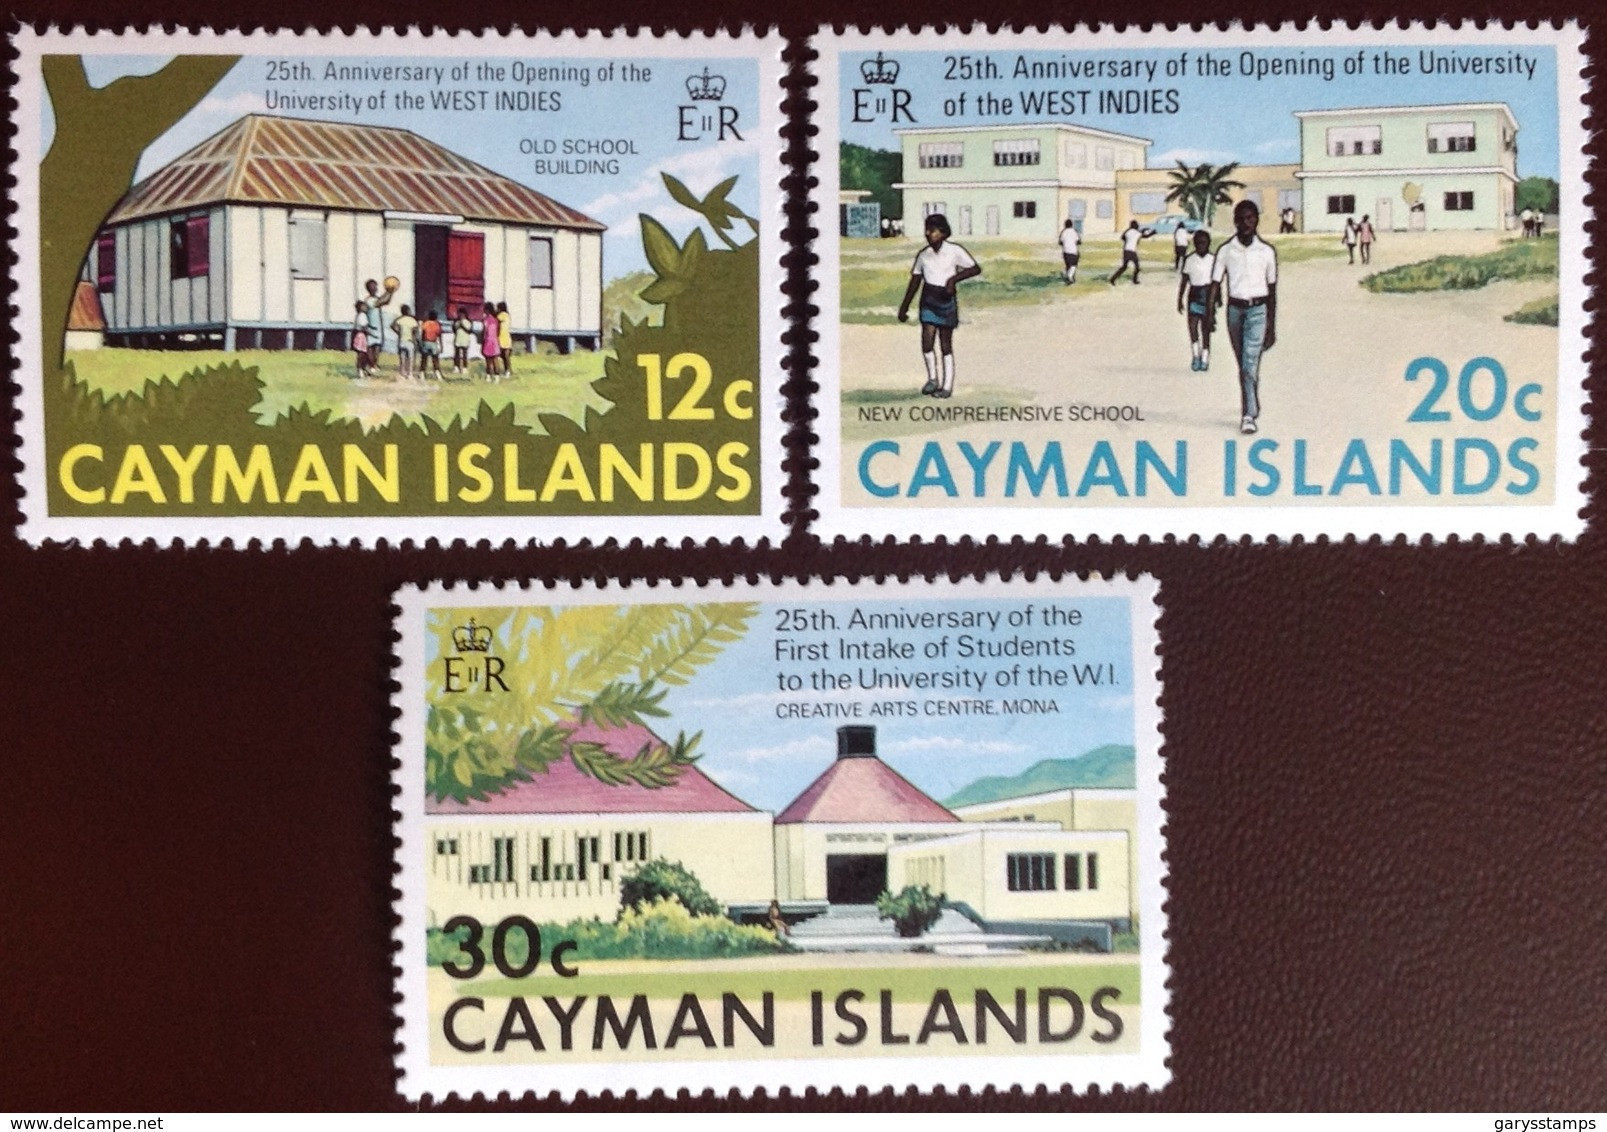 Cayman Islands 1974 University Anniversary MNH - Caimán (Islas)